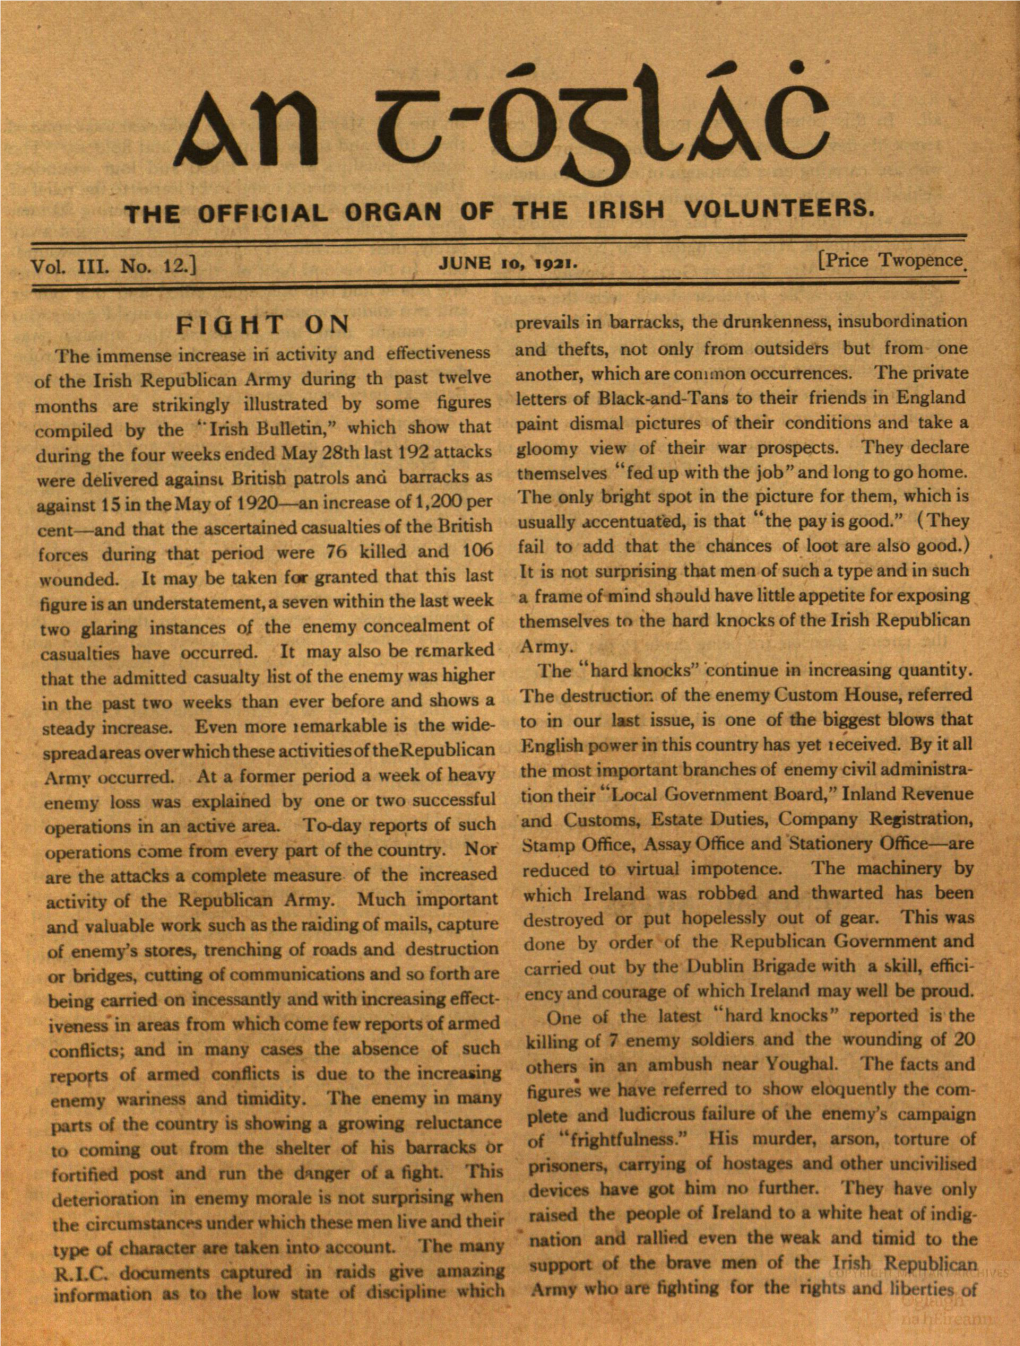 The Offi-Cial Organ of the Irish Volunteers